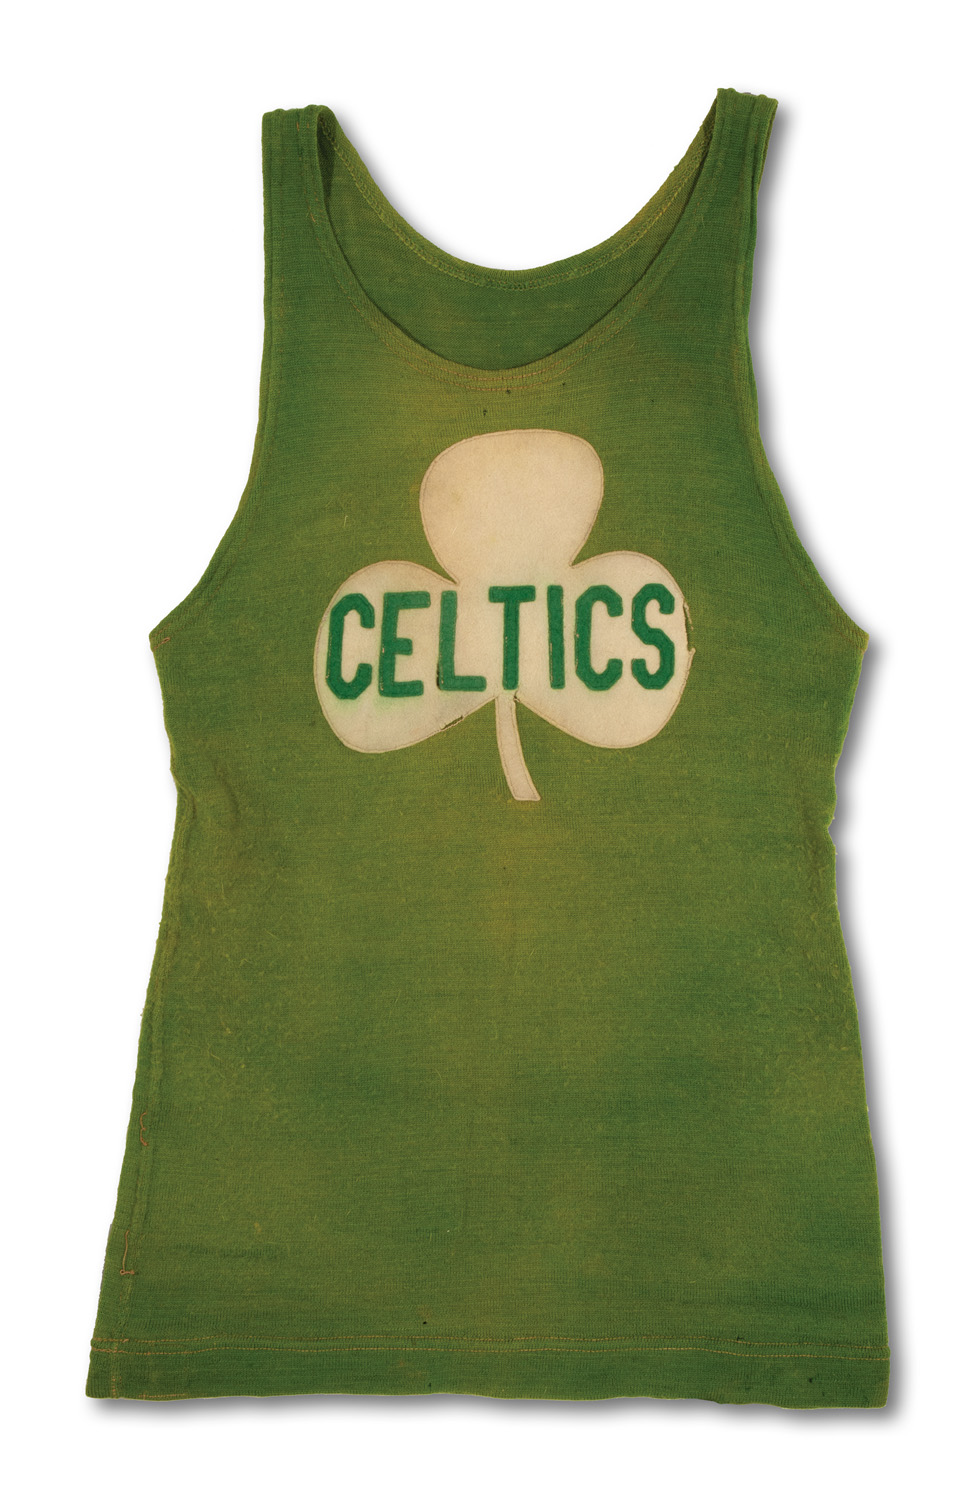 jersey celtics original